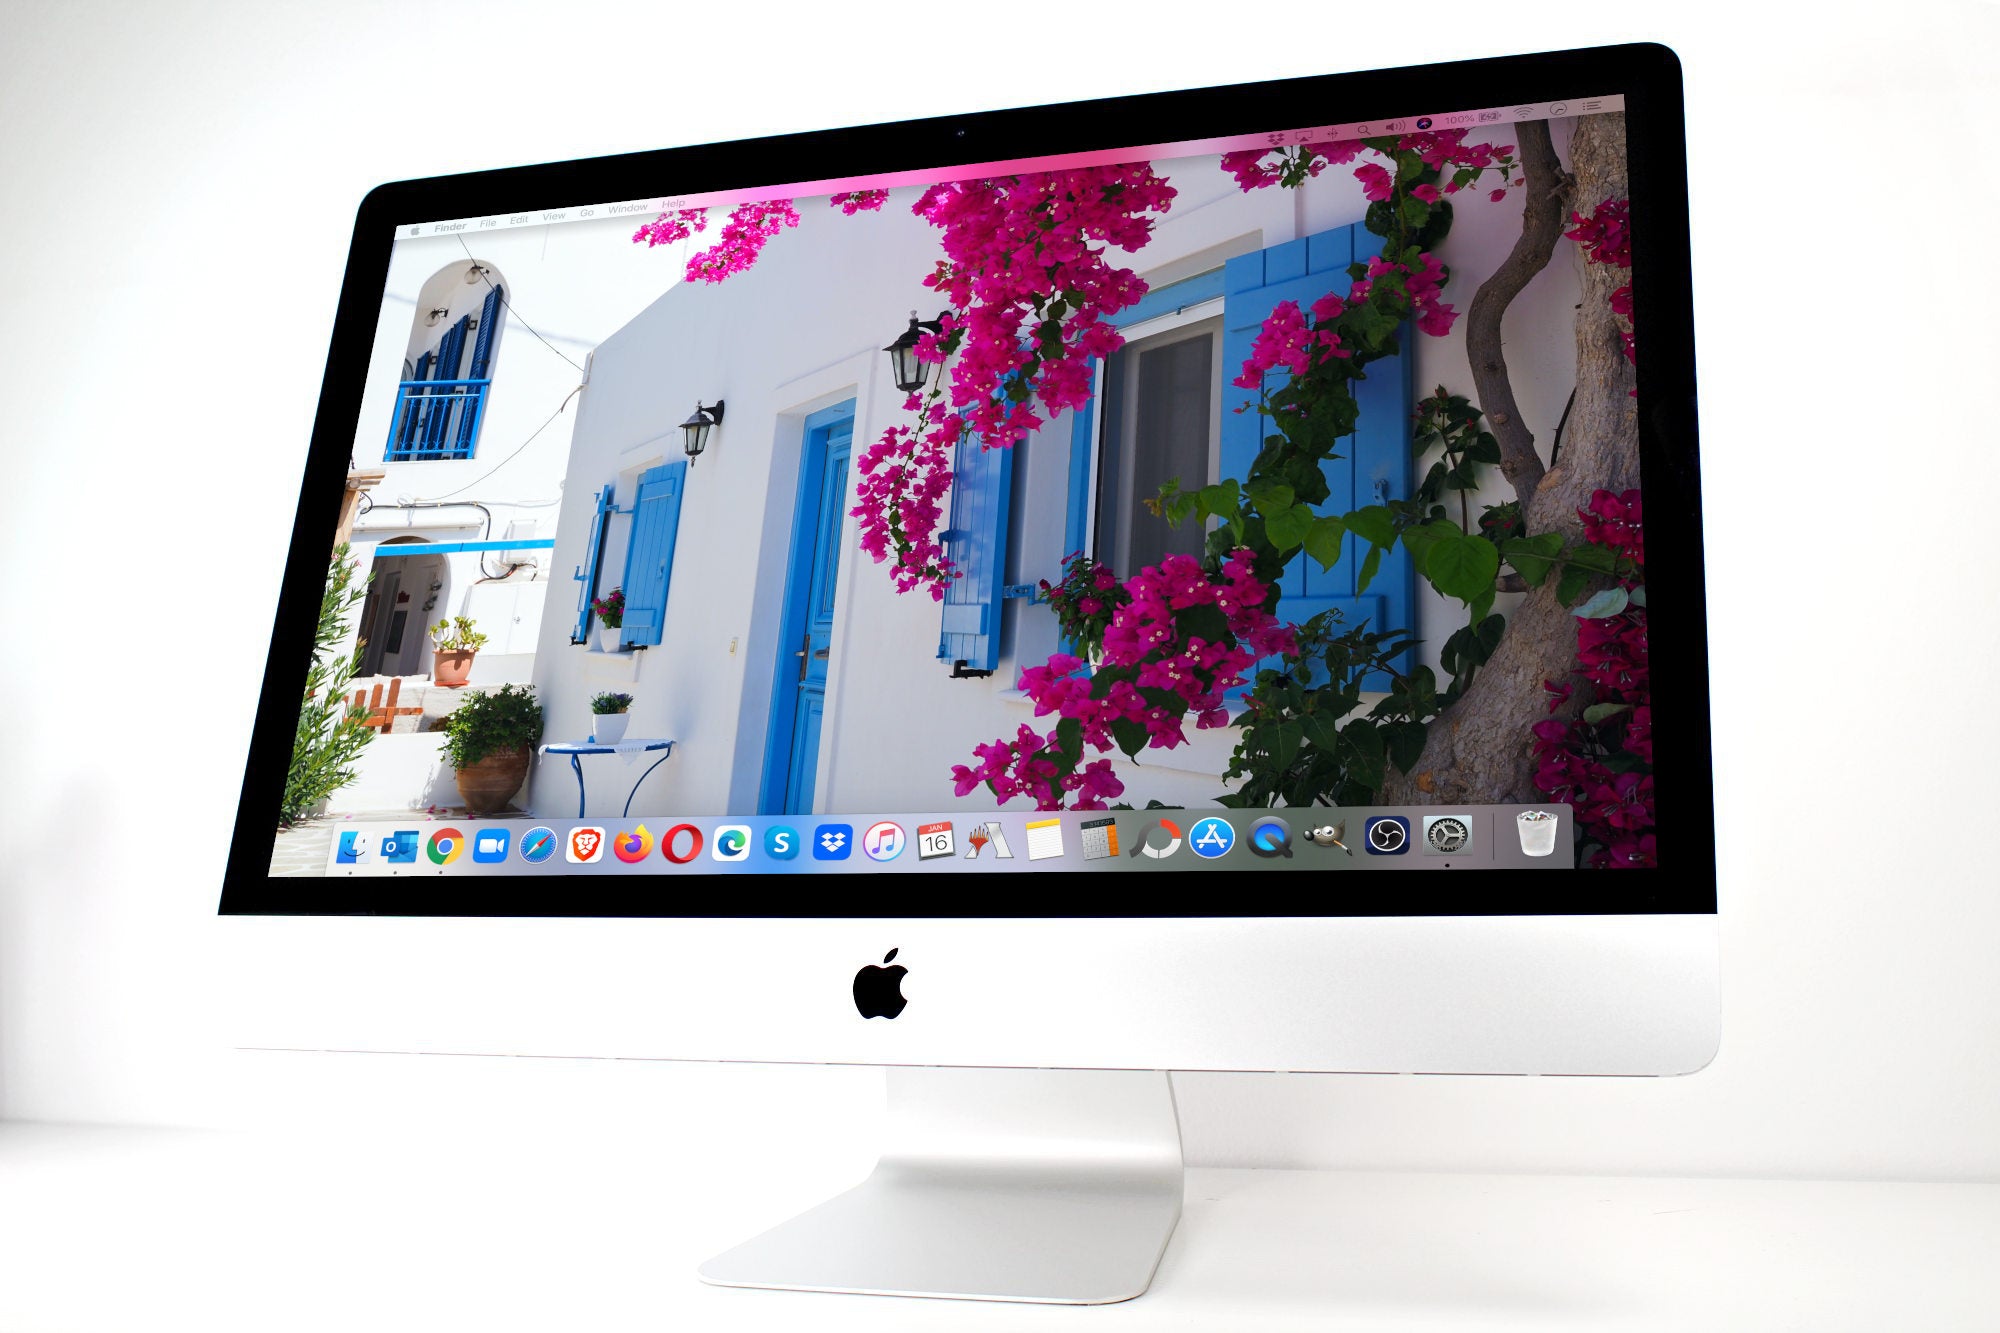 Buy Used & Refurbished Apple iMac 21.5